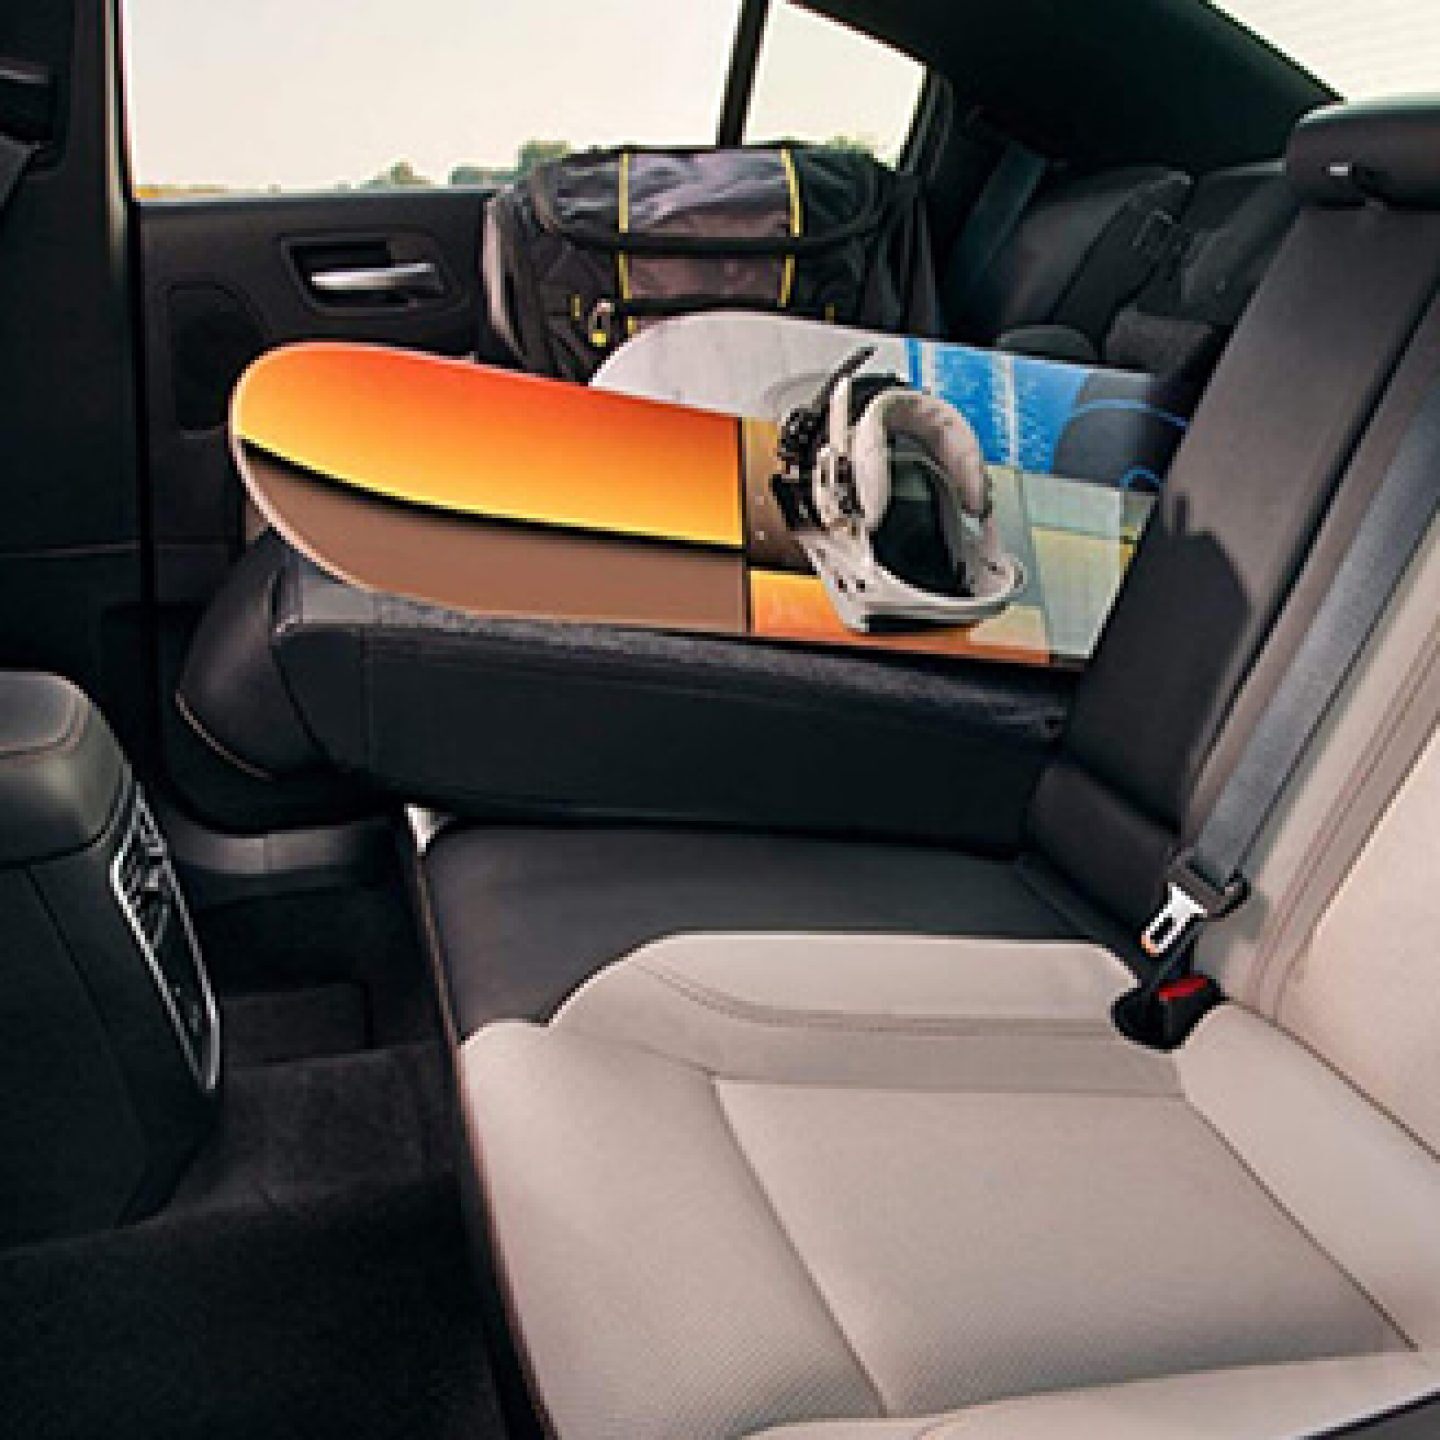 2020-dodge-charger-interior-folding-rear-seats.jpg.image.1440